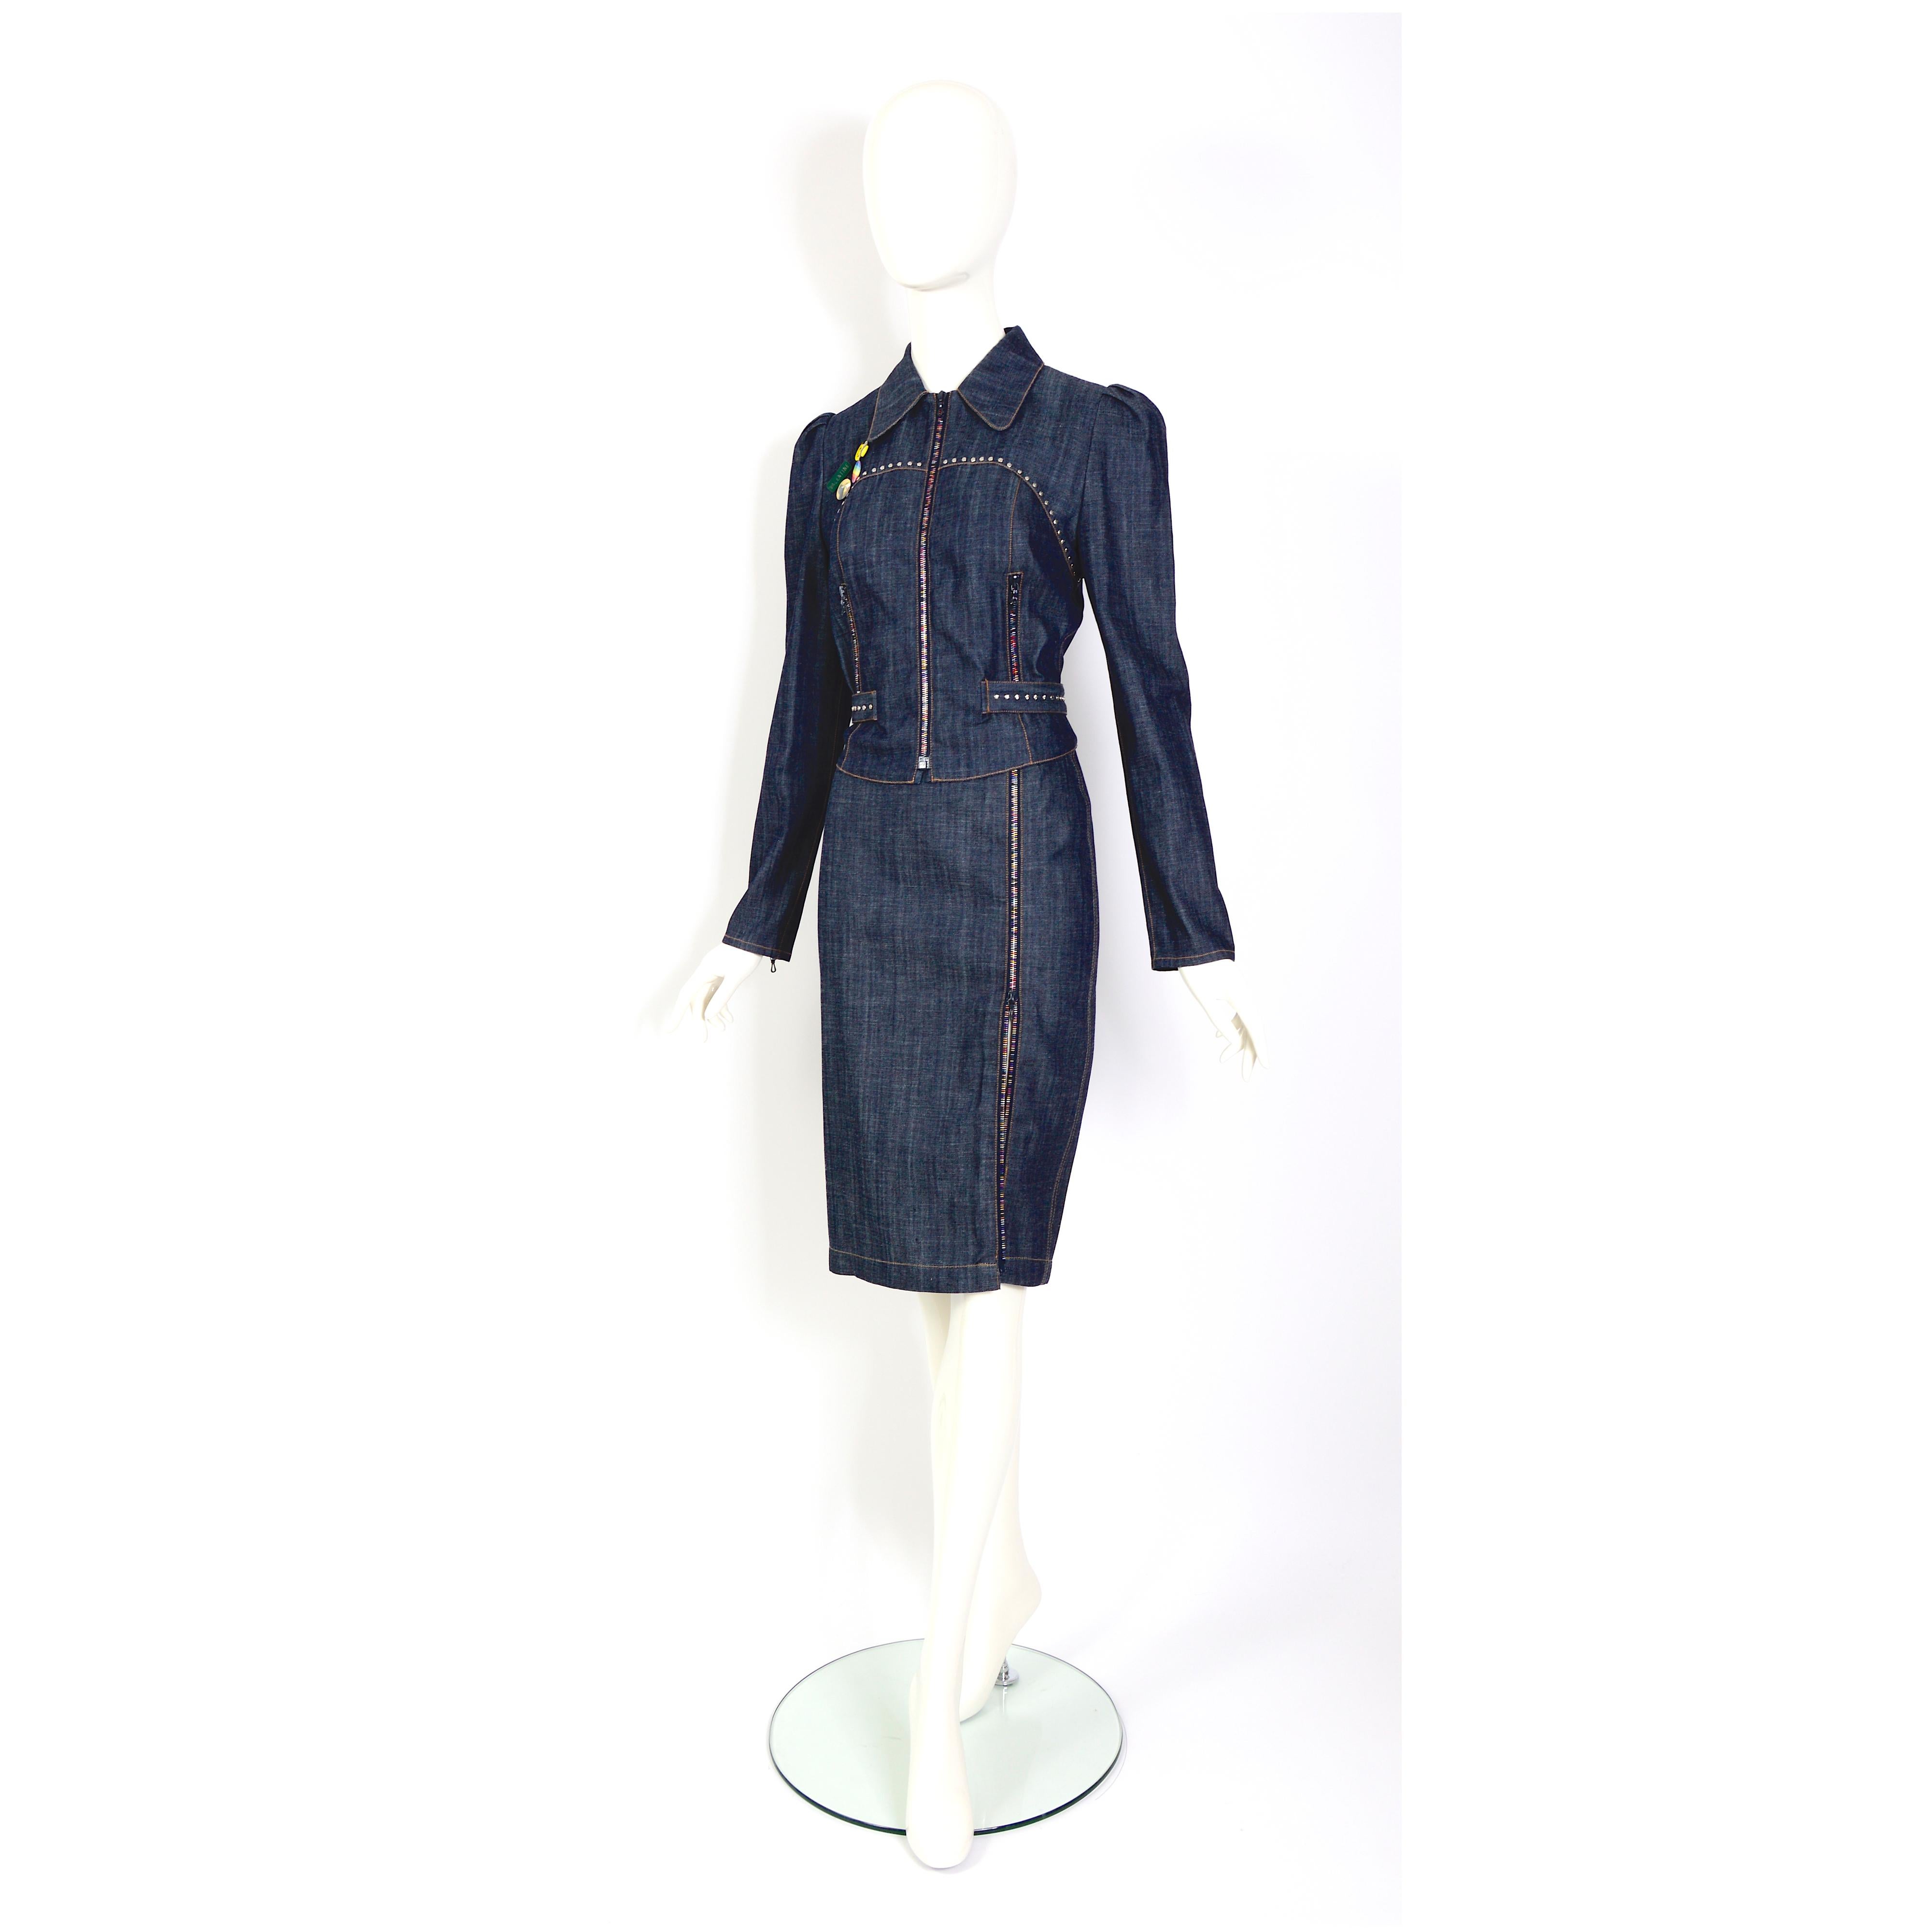 Chloé by Stella McCartney vintage 2001 denim jacket and skirt set For Sale 2